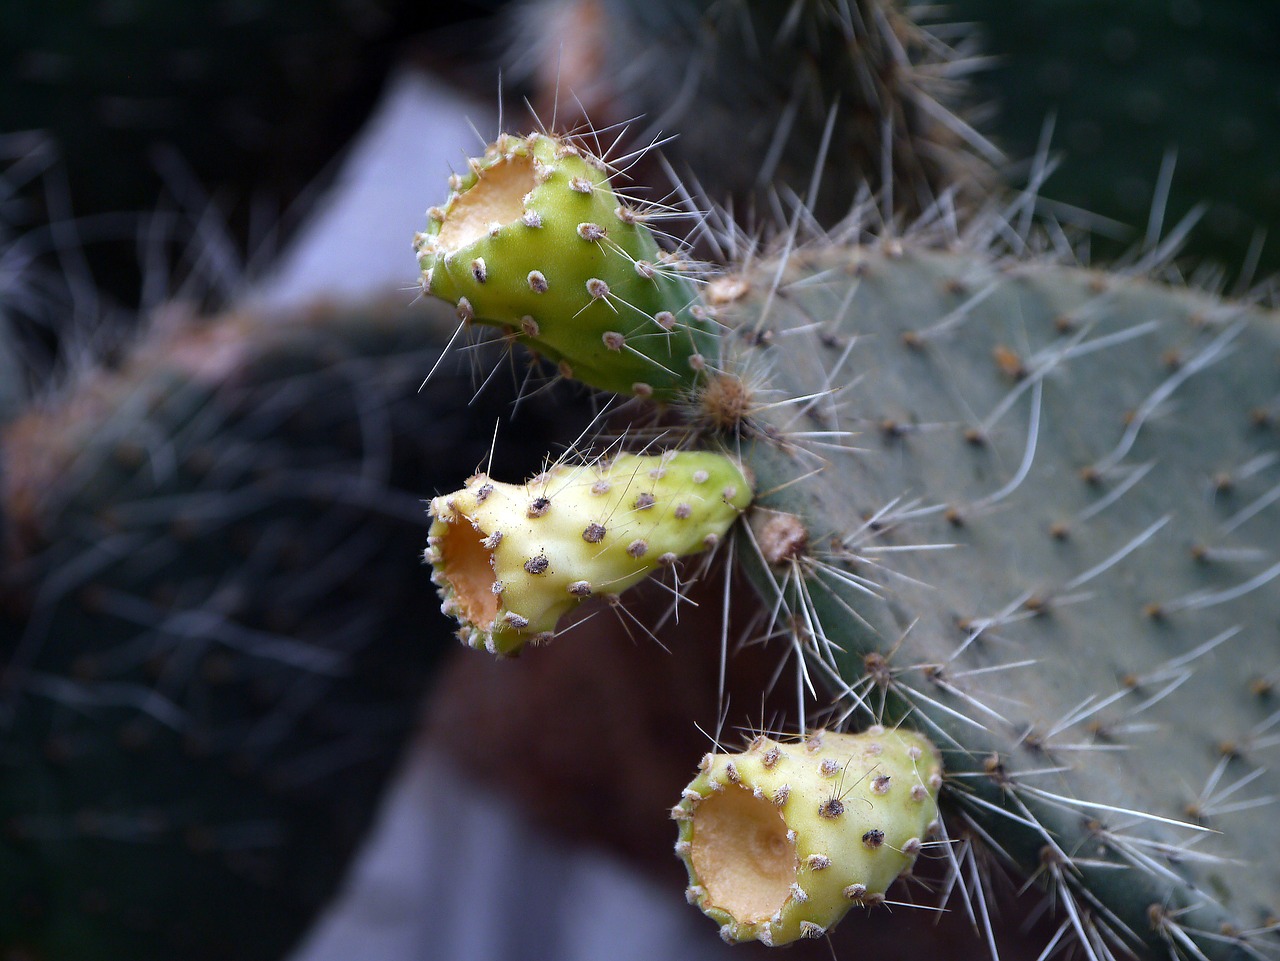 cactus prickly thorn free photo